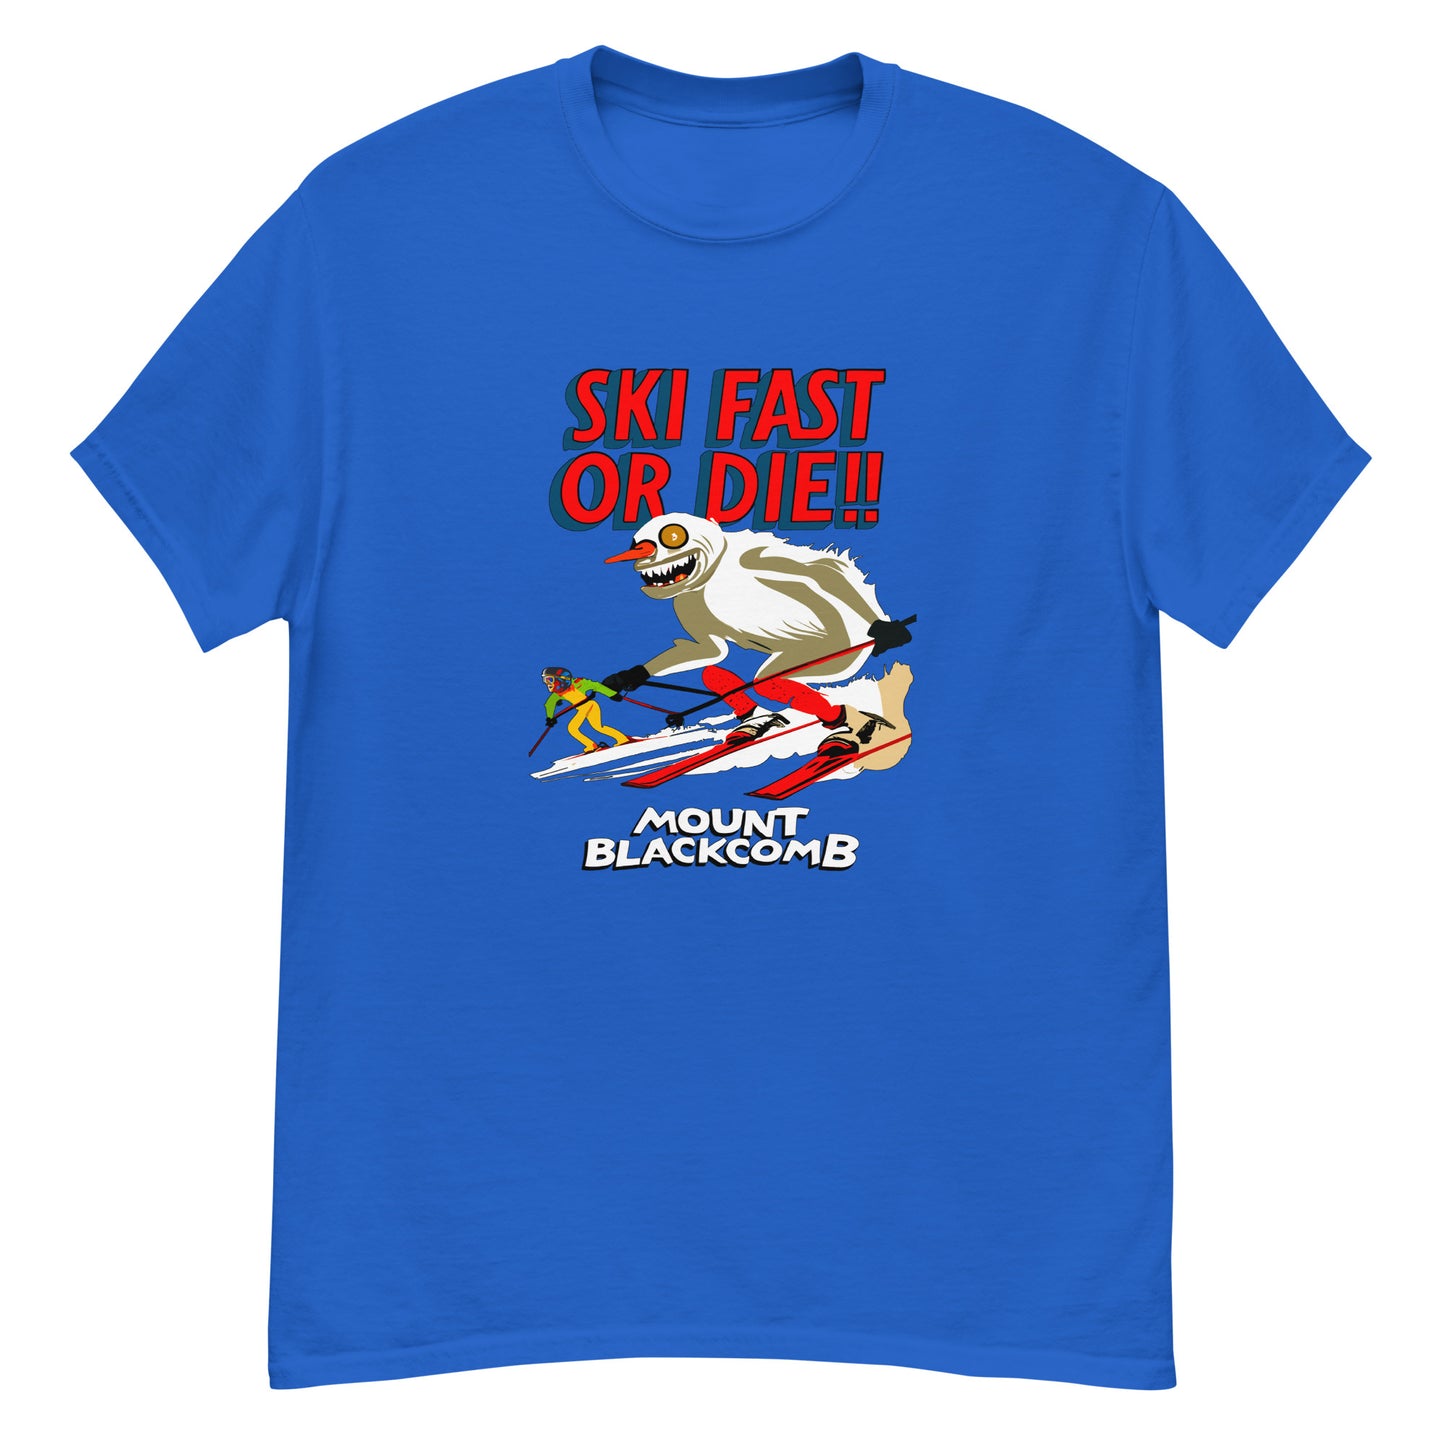 Ski fast or die yeti skiing mount blackcomb printed t-shirt by Whistler Shirts